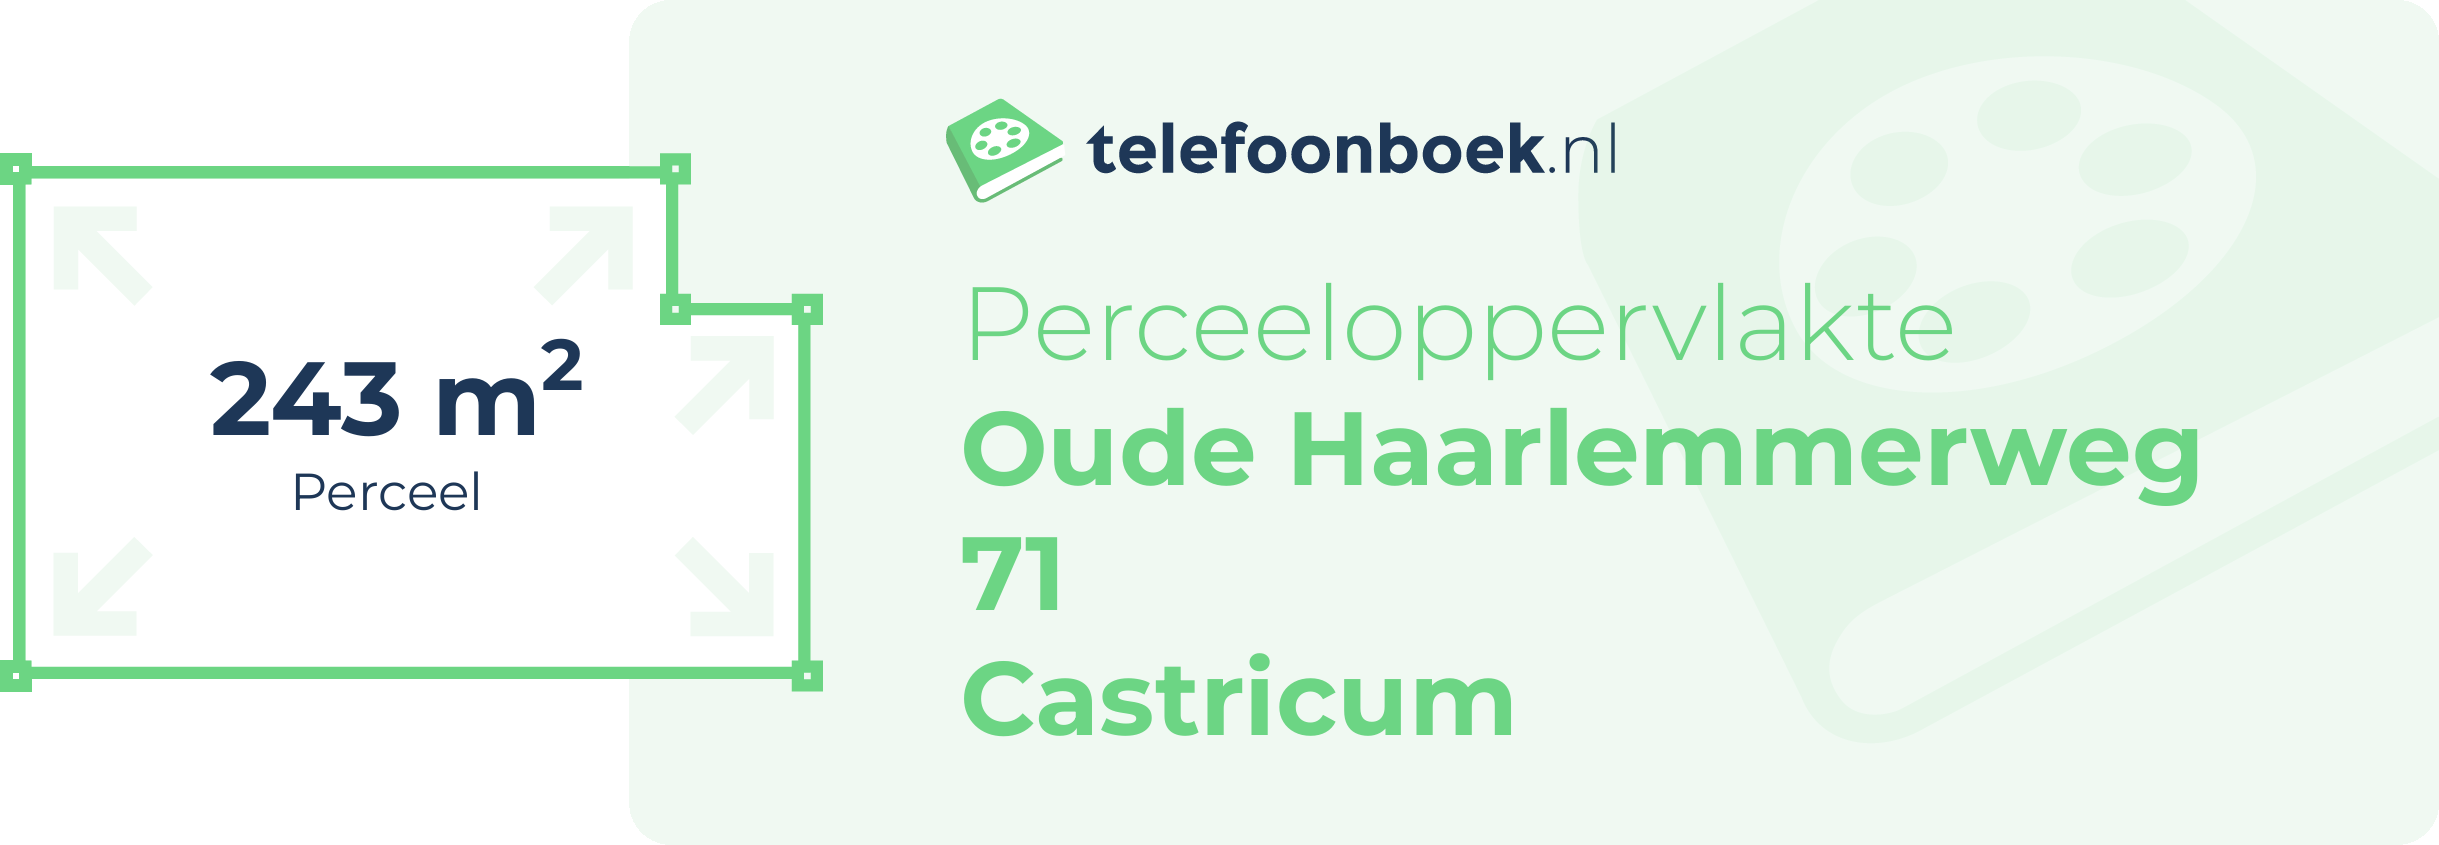 Perceeloppervlakte Oude Haarlemmerweg 71 Castricum